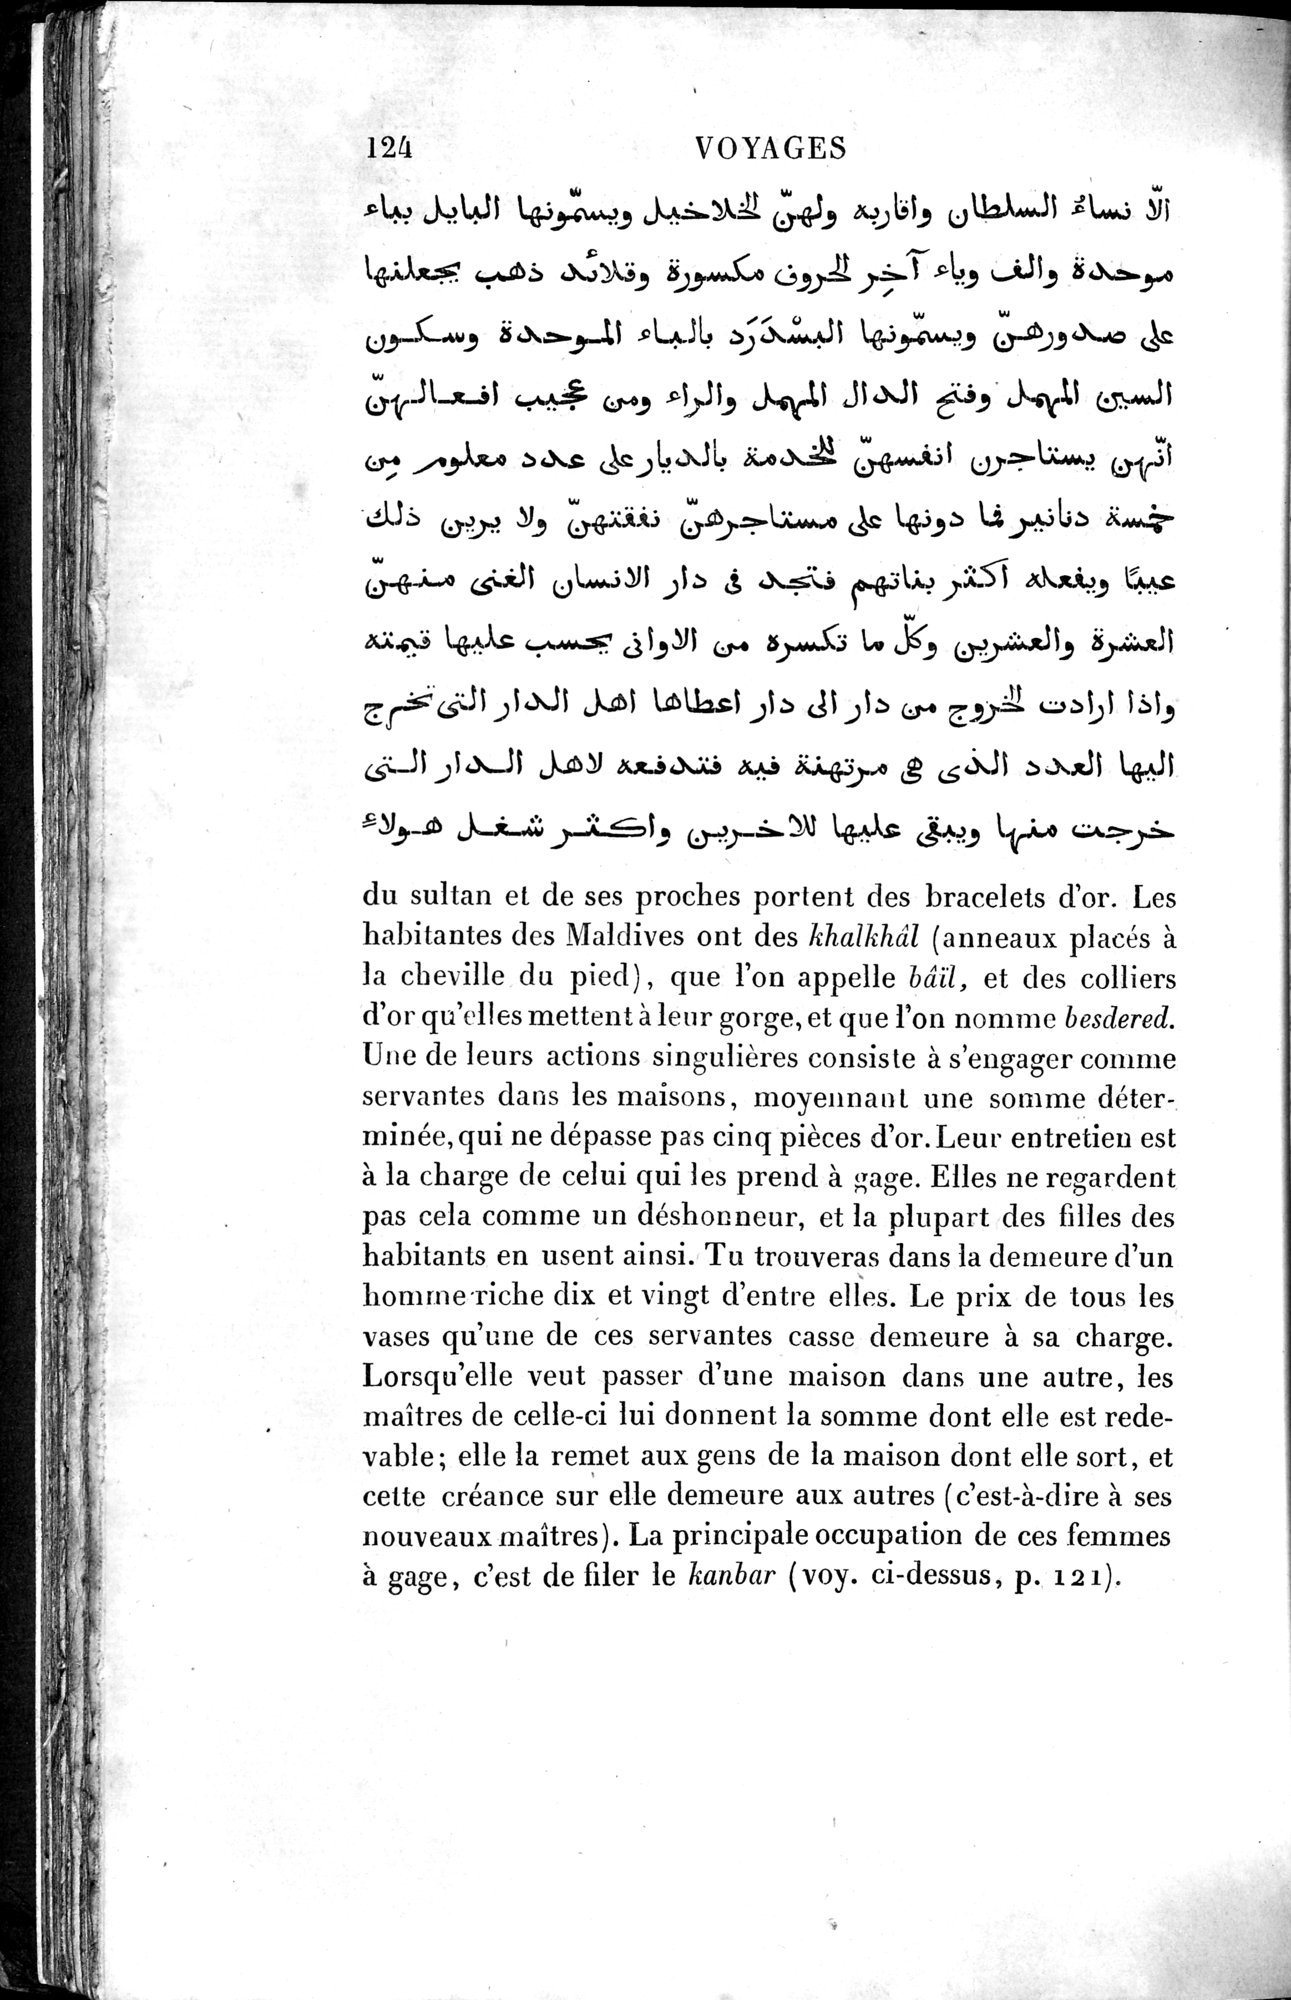 Voyages d'Ibn Batoutah : vol.4 / 136 ページ（白黒高解像度画像）